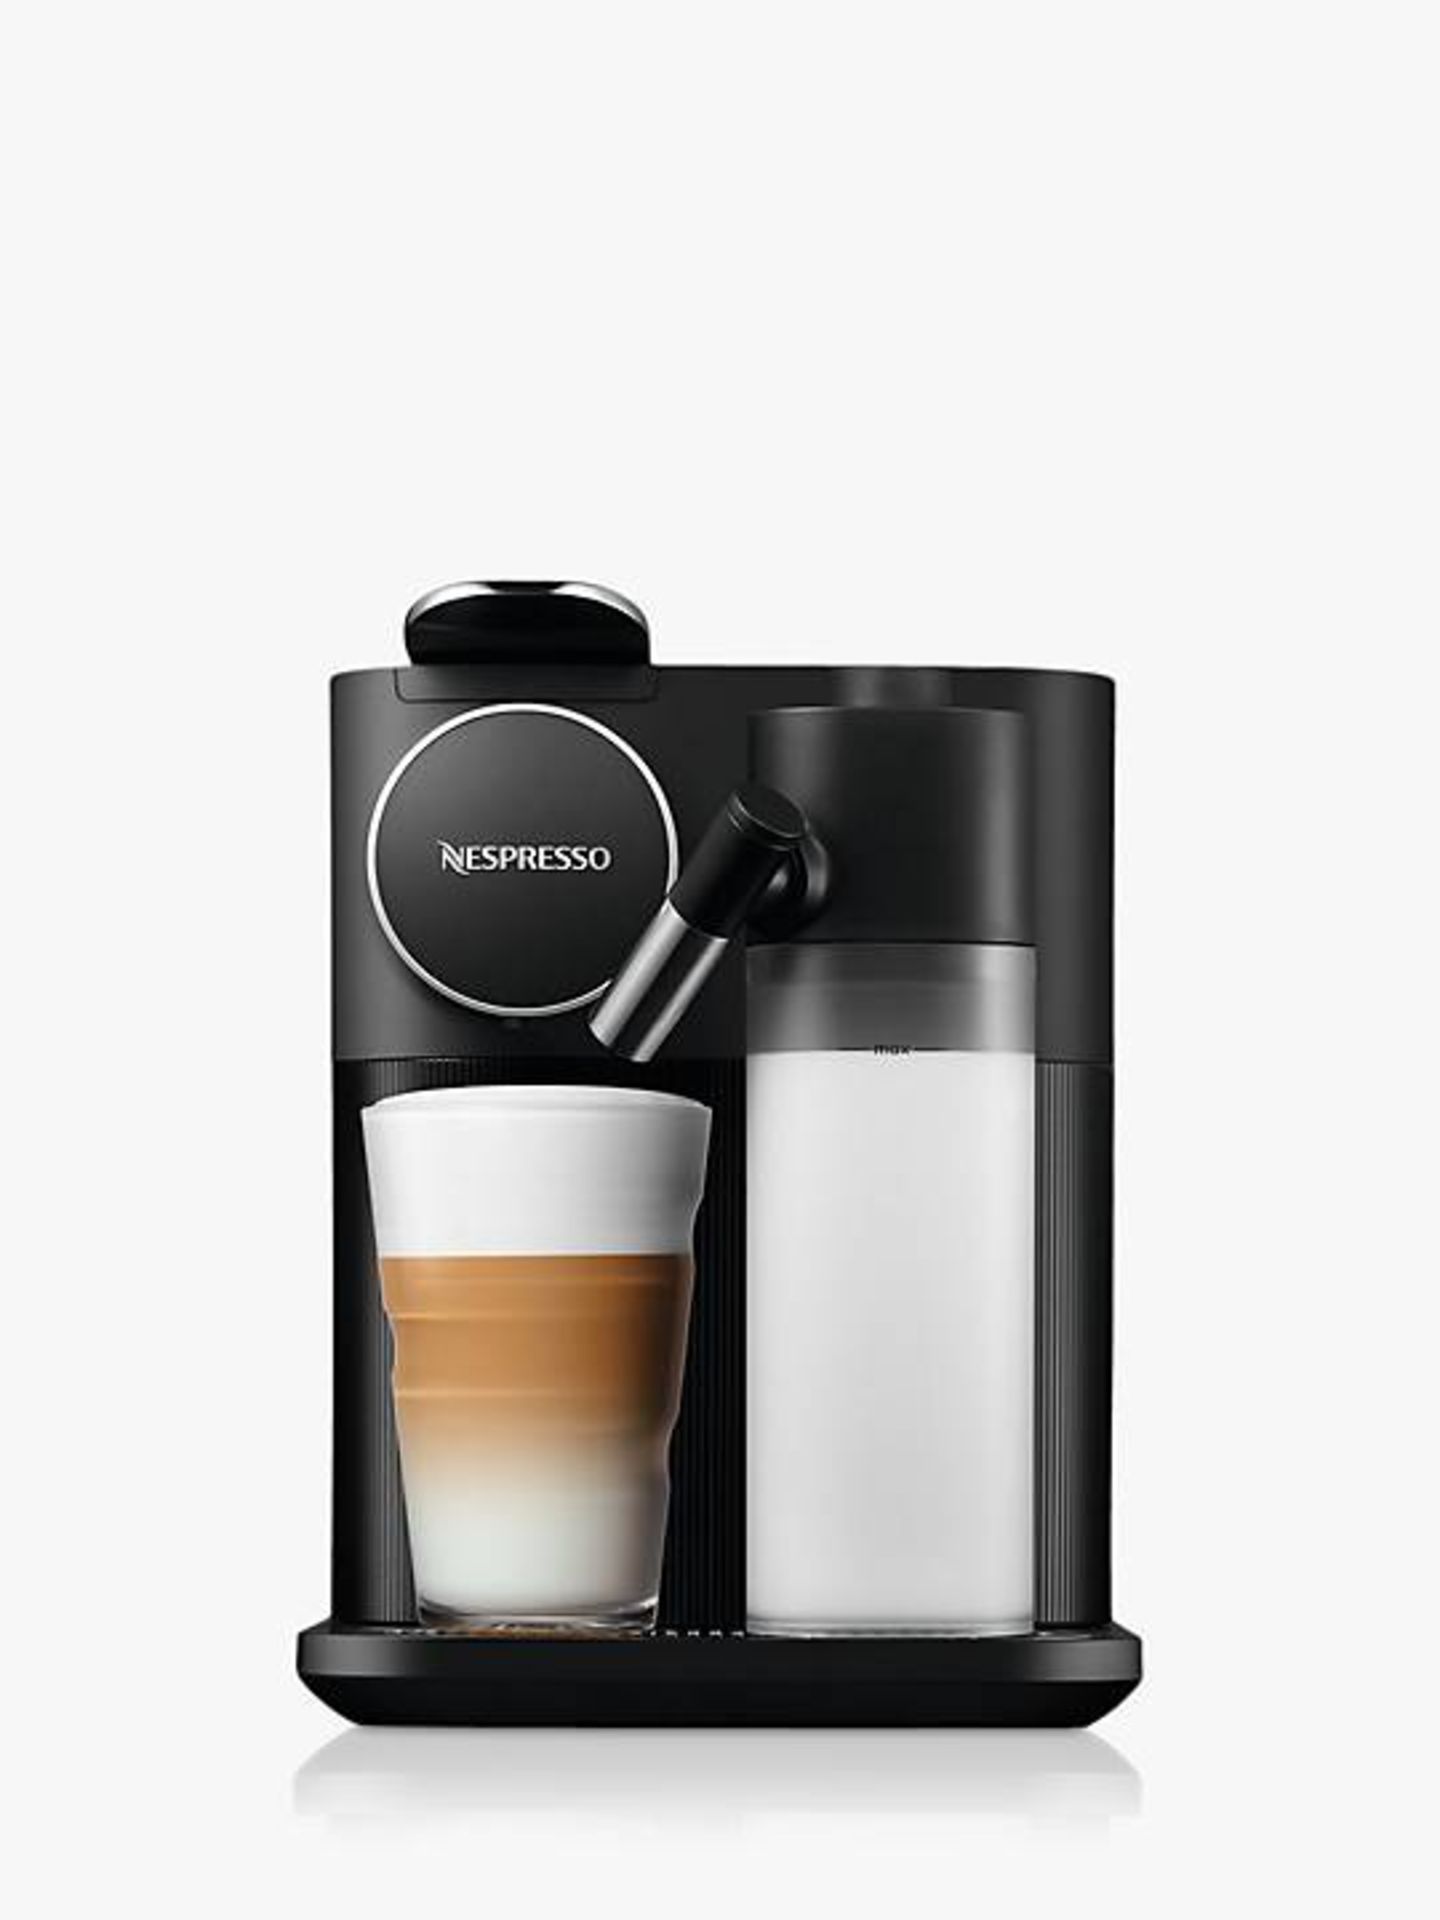 WGR00103 - Nespresso EN650 Gran Lattissima Capsule Coffee Machine by De'Longhi.